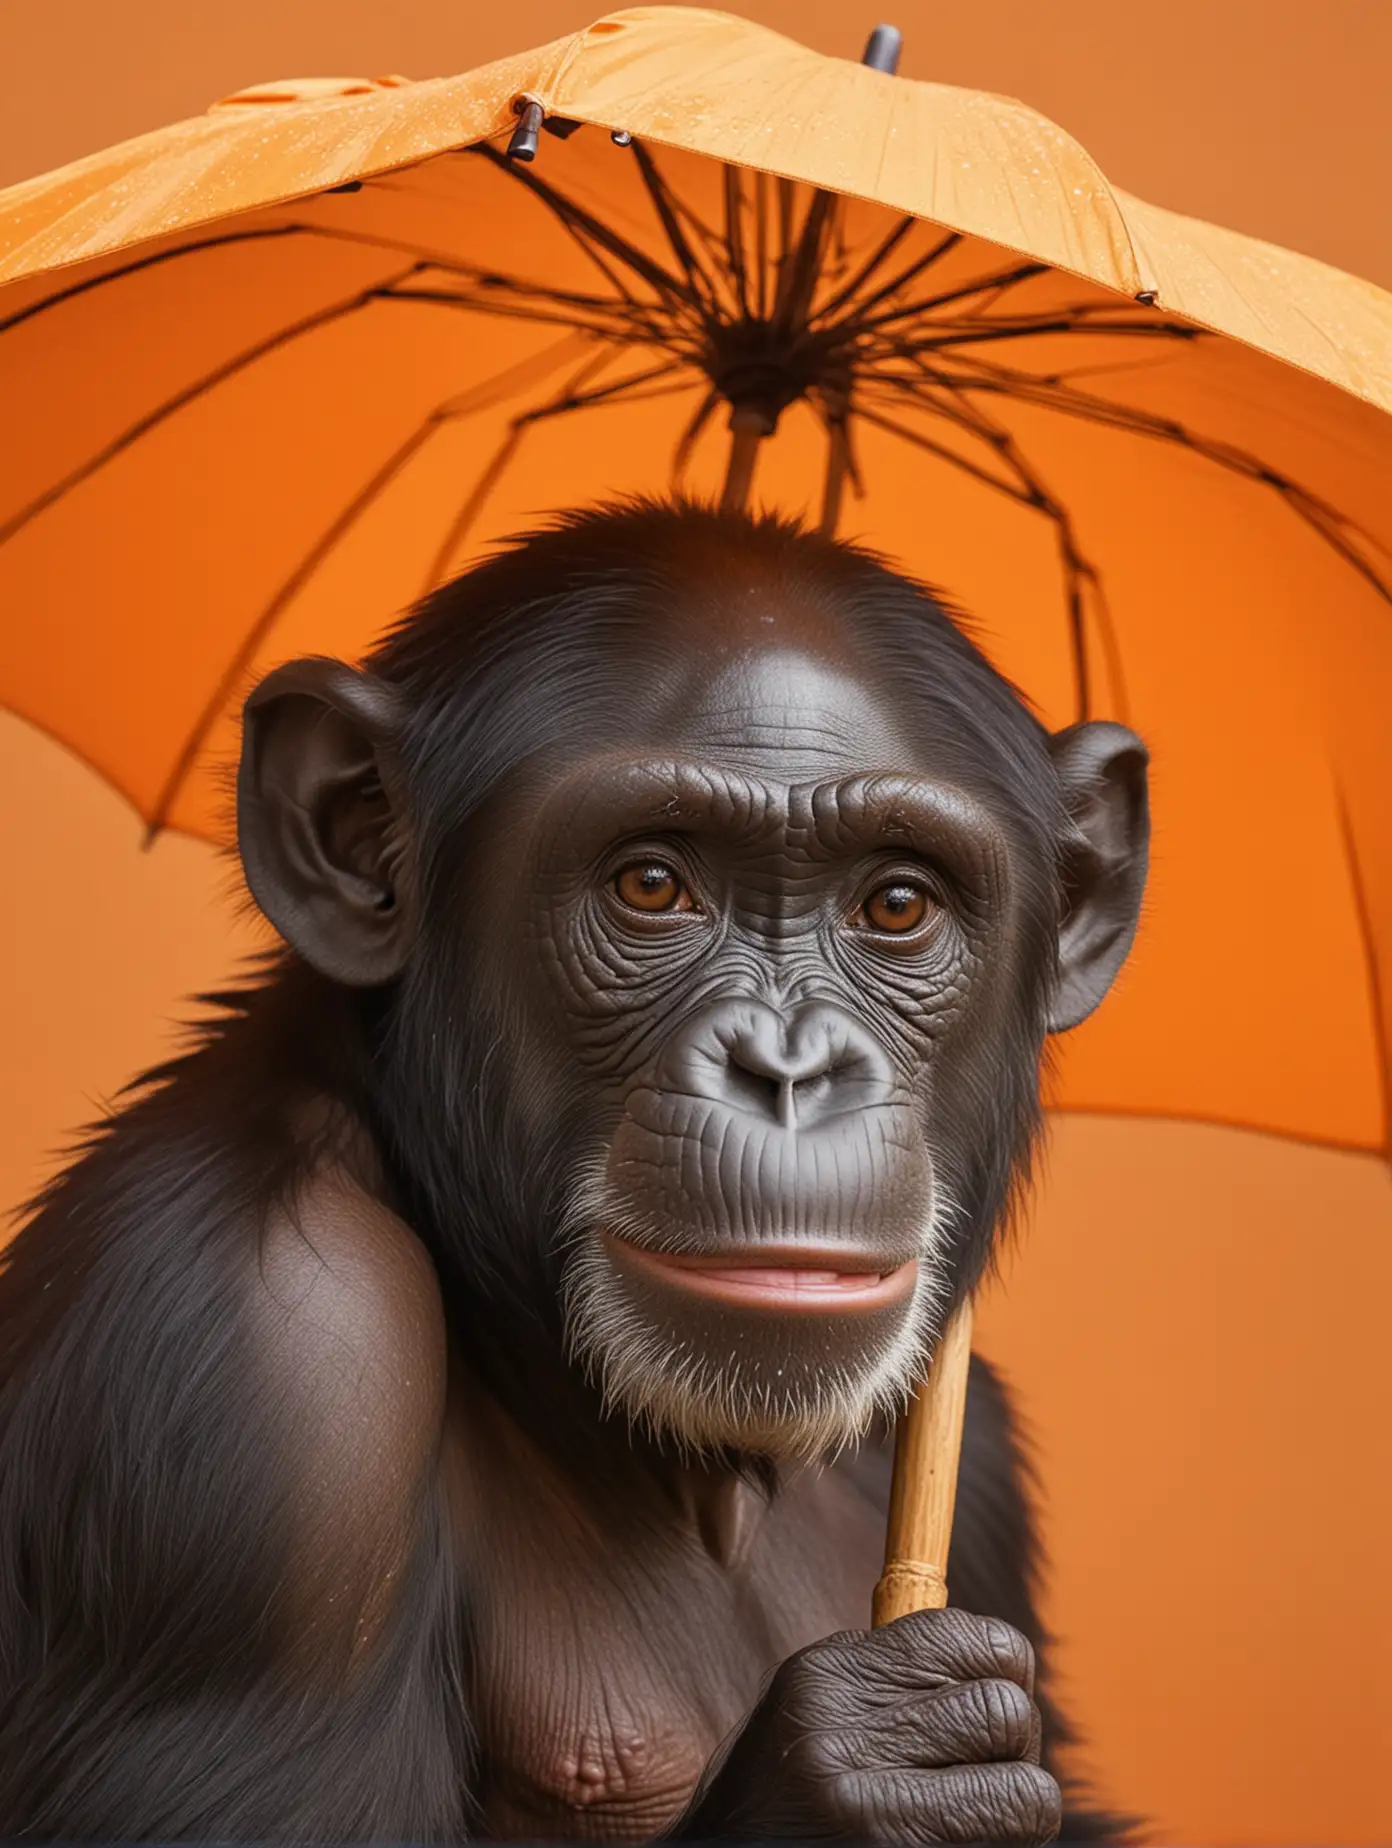 Chimpanzee Portrait with Colorful Umbrella on Vibrant Orange Background